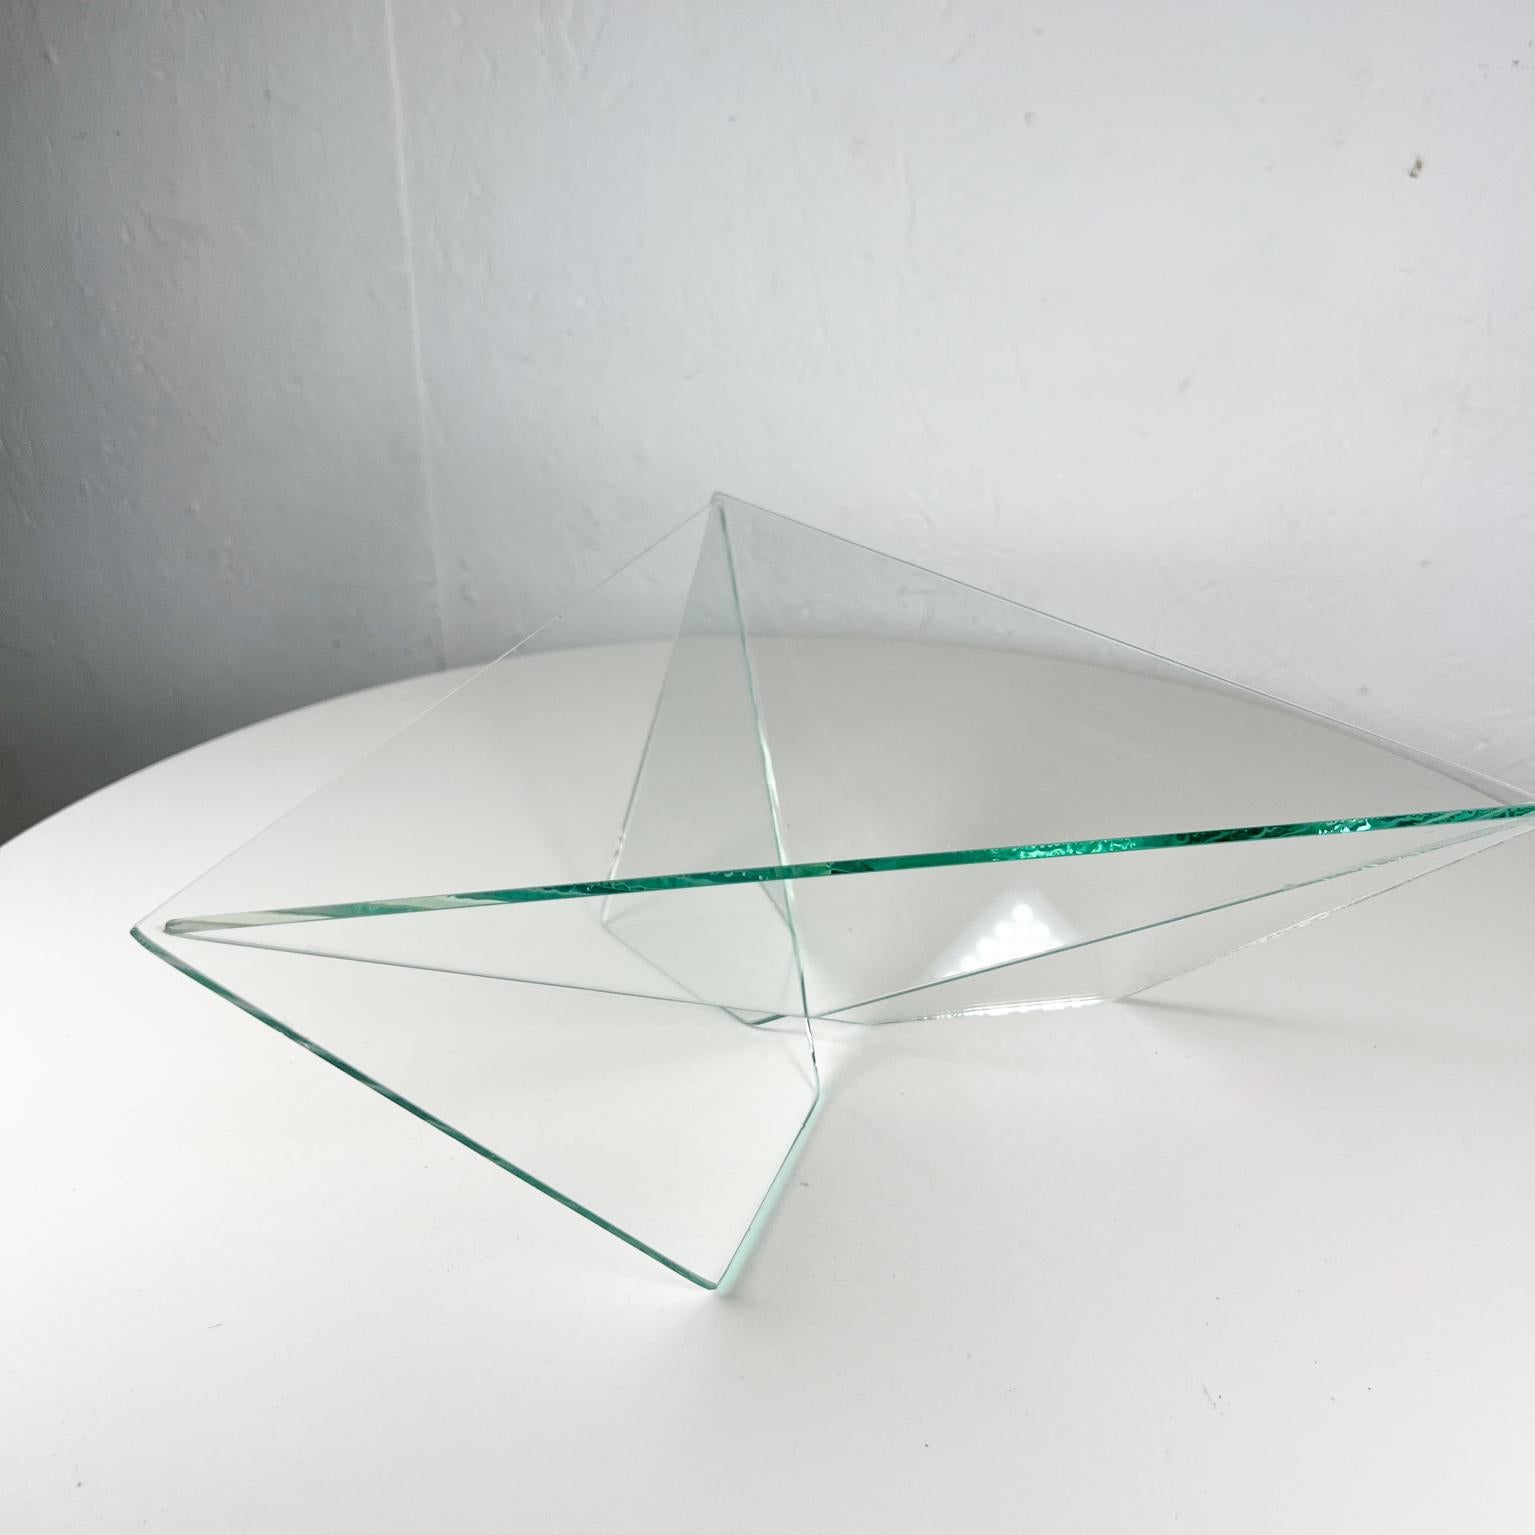 1988 Pyramid Modern Glass Art Bowl John Seitz In Good Condition For Sale In Chula Vista, CA